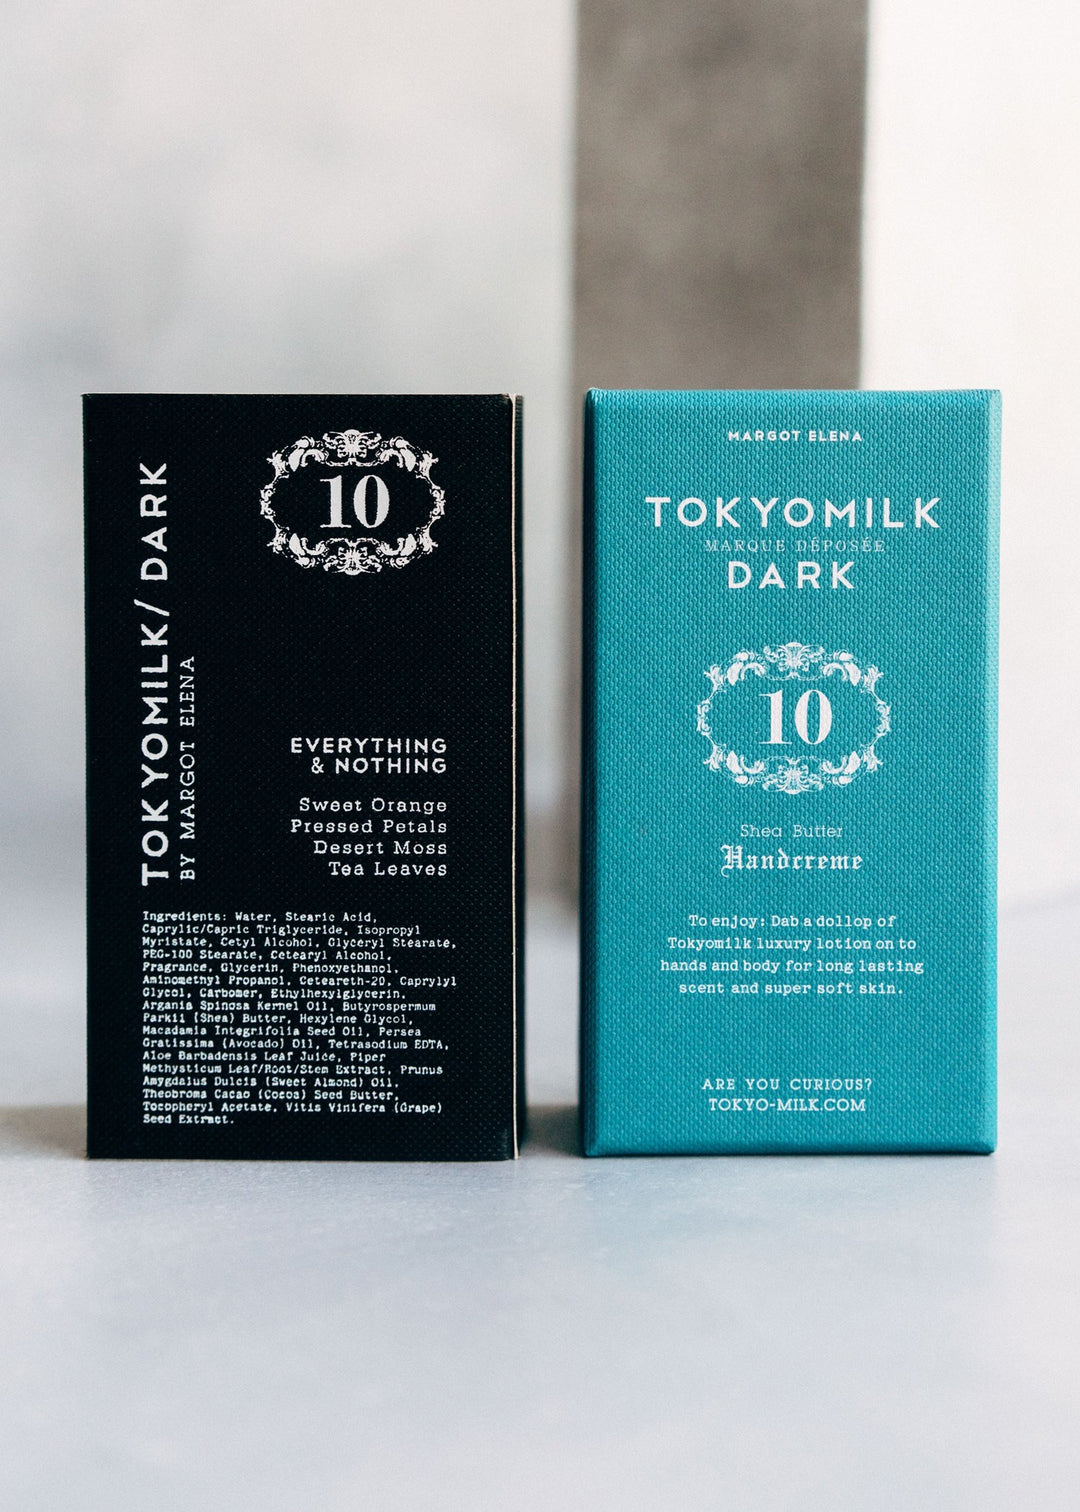 TokyoMilk Dark Shea Butter Hand Cream , Everything & Nothing- Teal